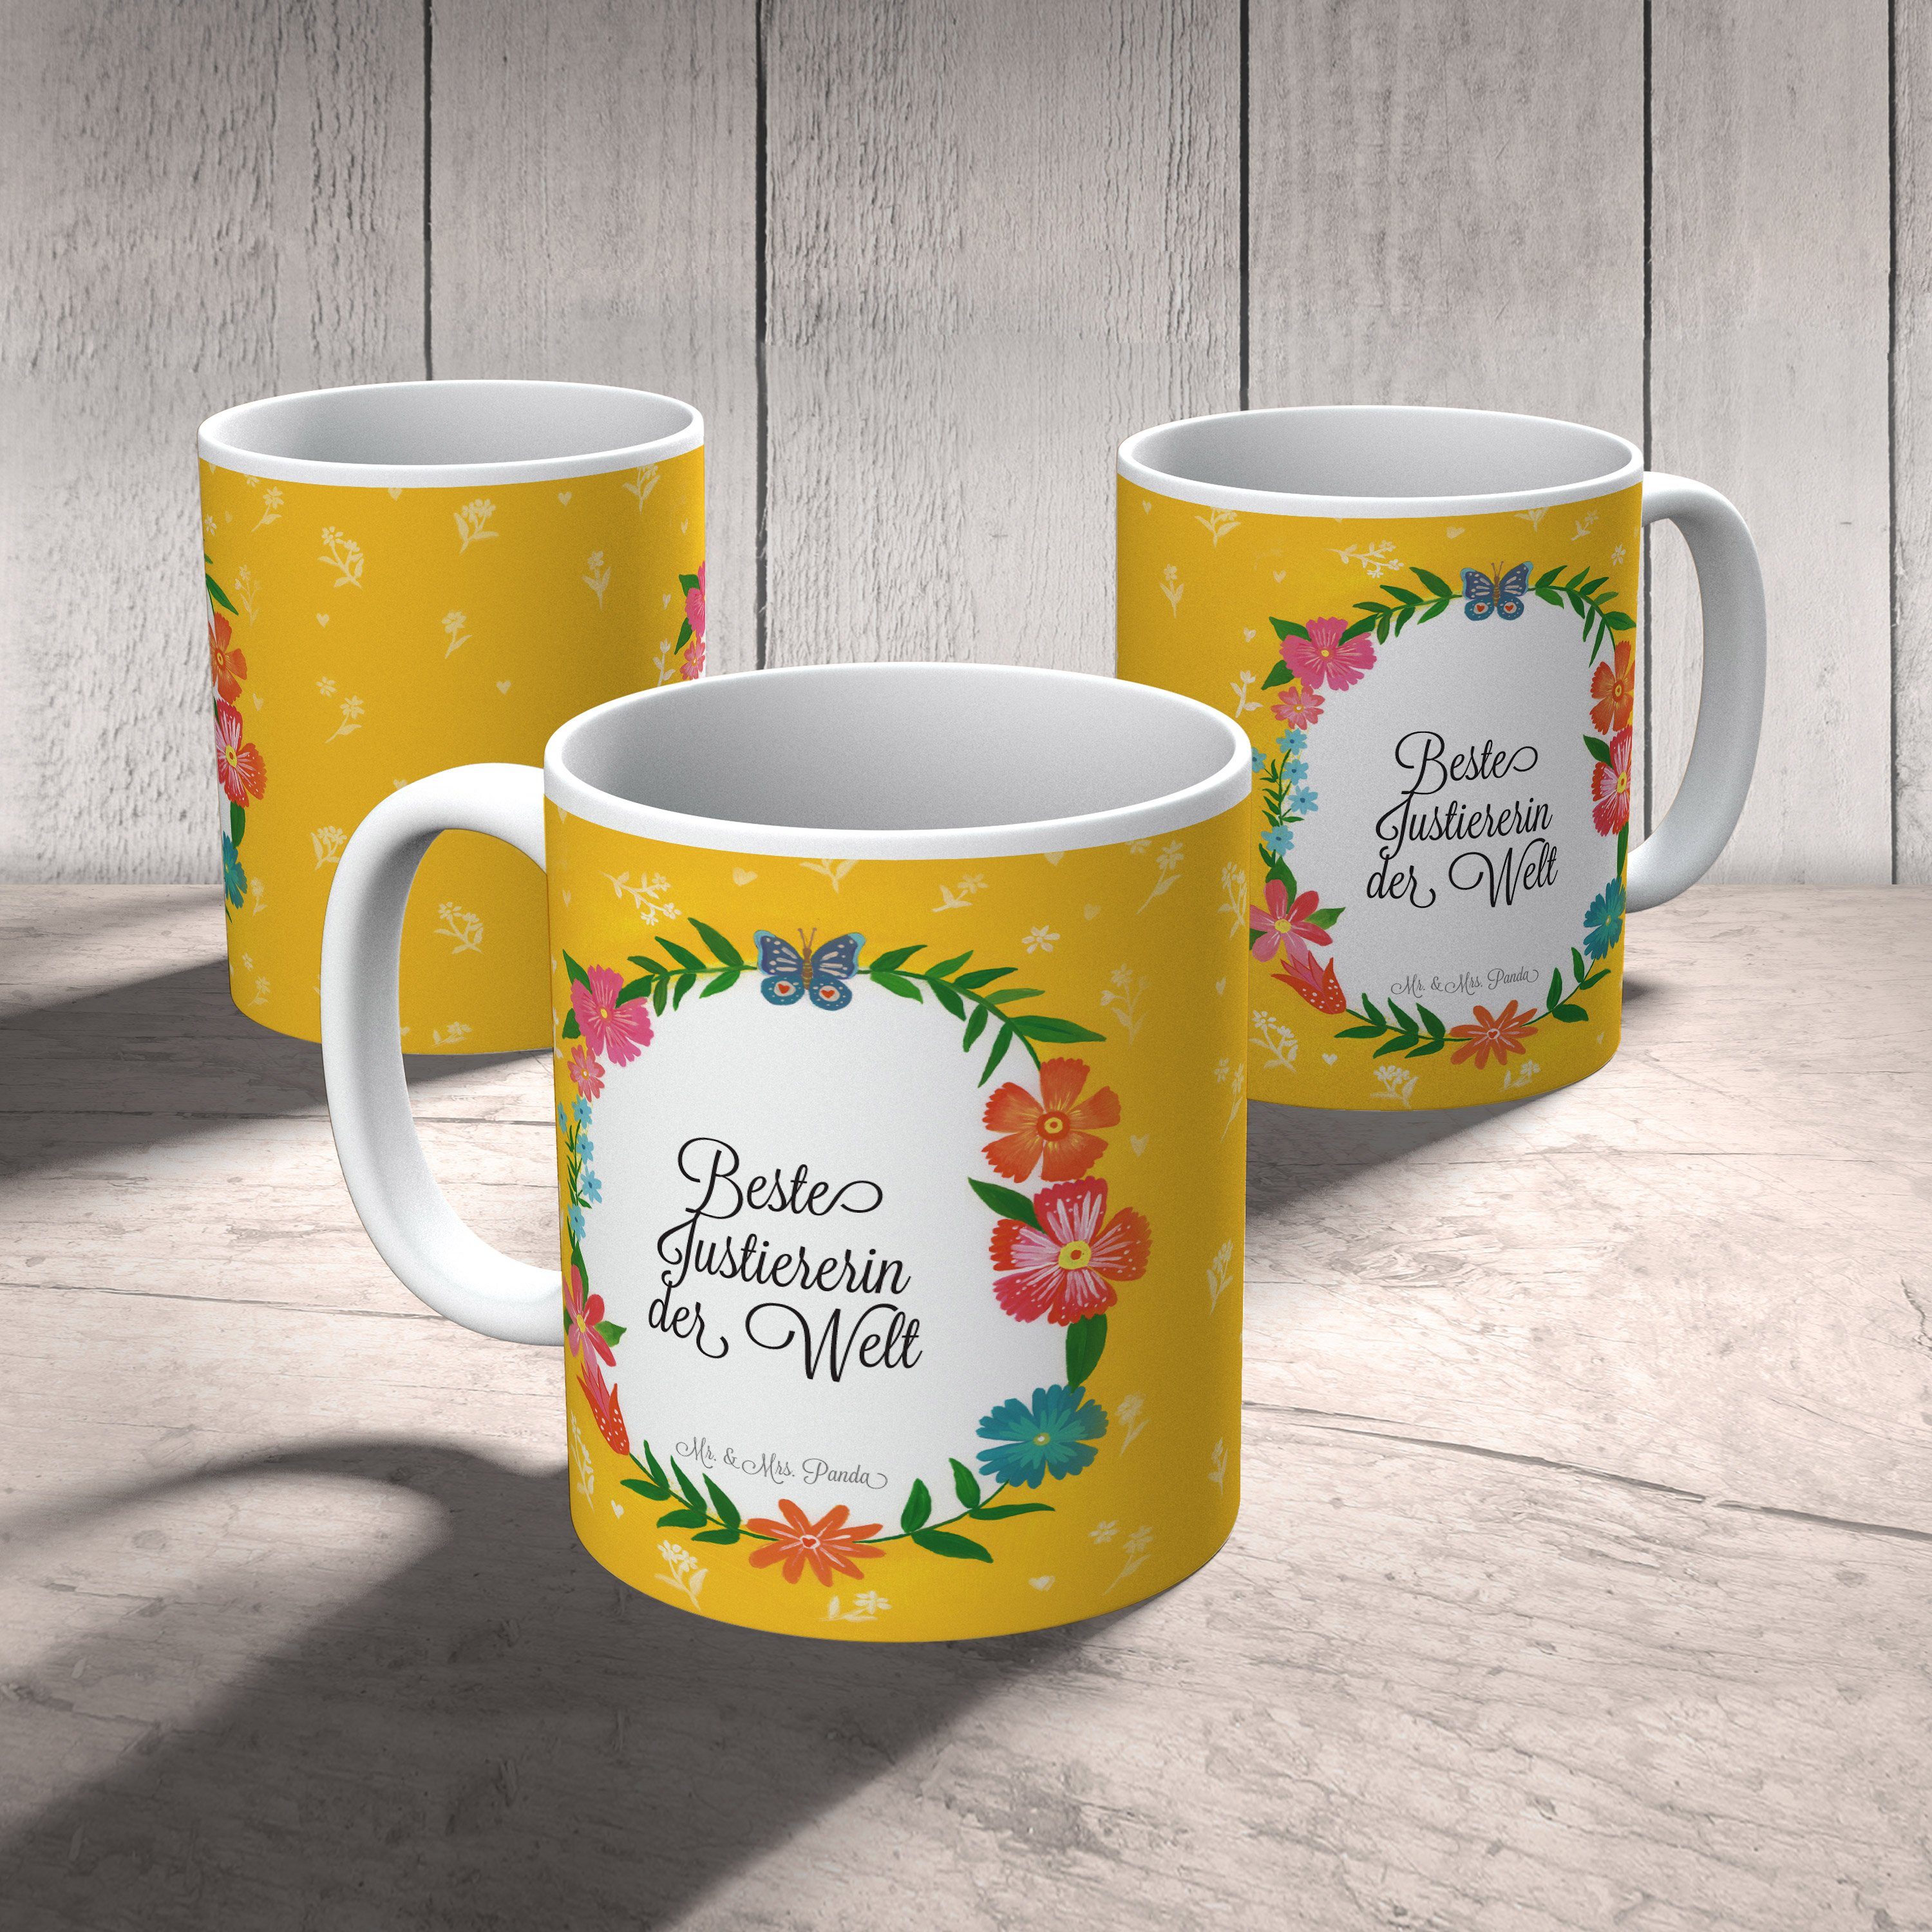 Mr. & Mrs. Panda Tasse Keramik Geschenk, Beruf, Kaffeebecher, Büro - Tasse, Tasse Justiererin Motive